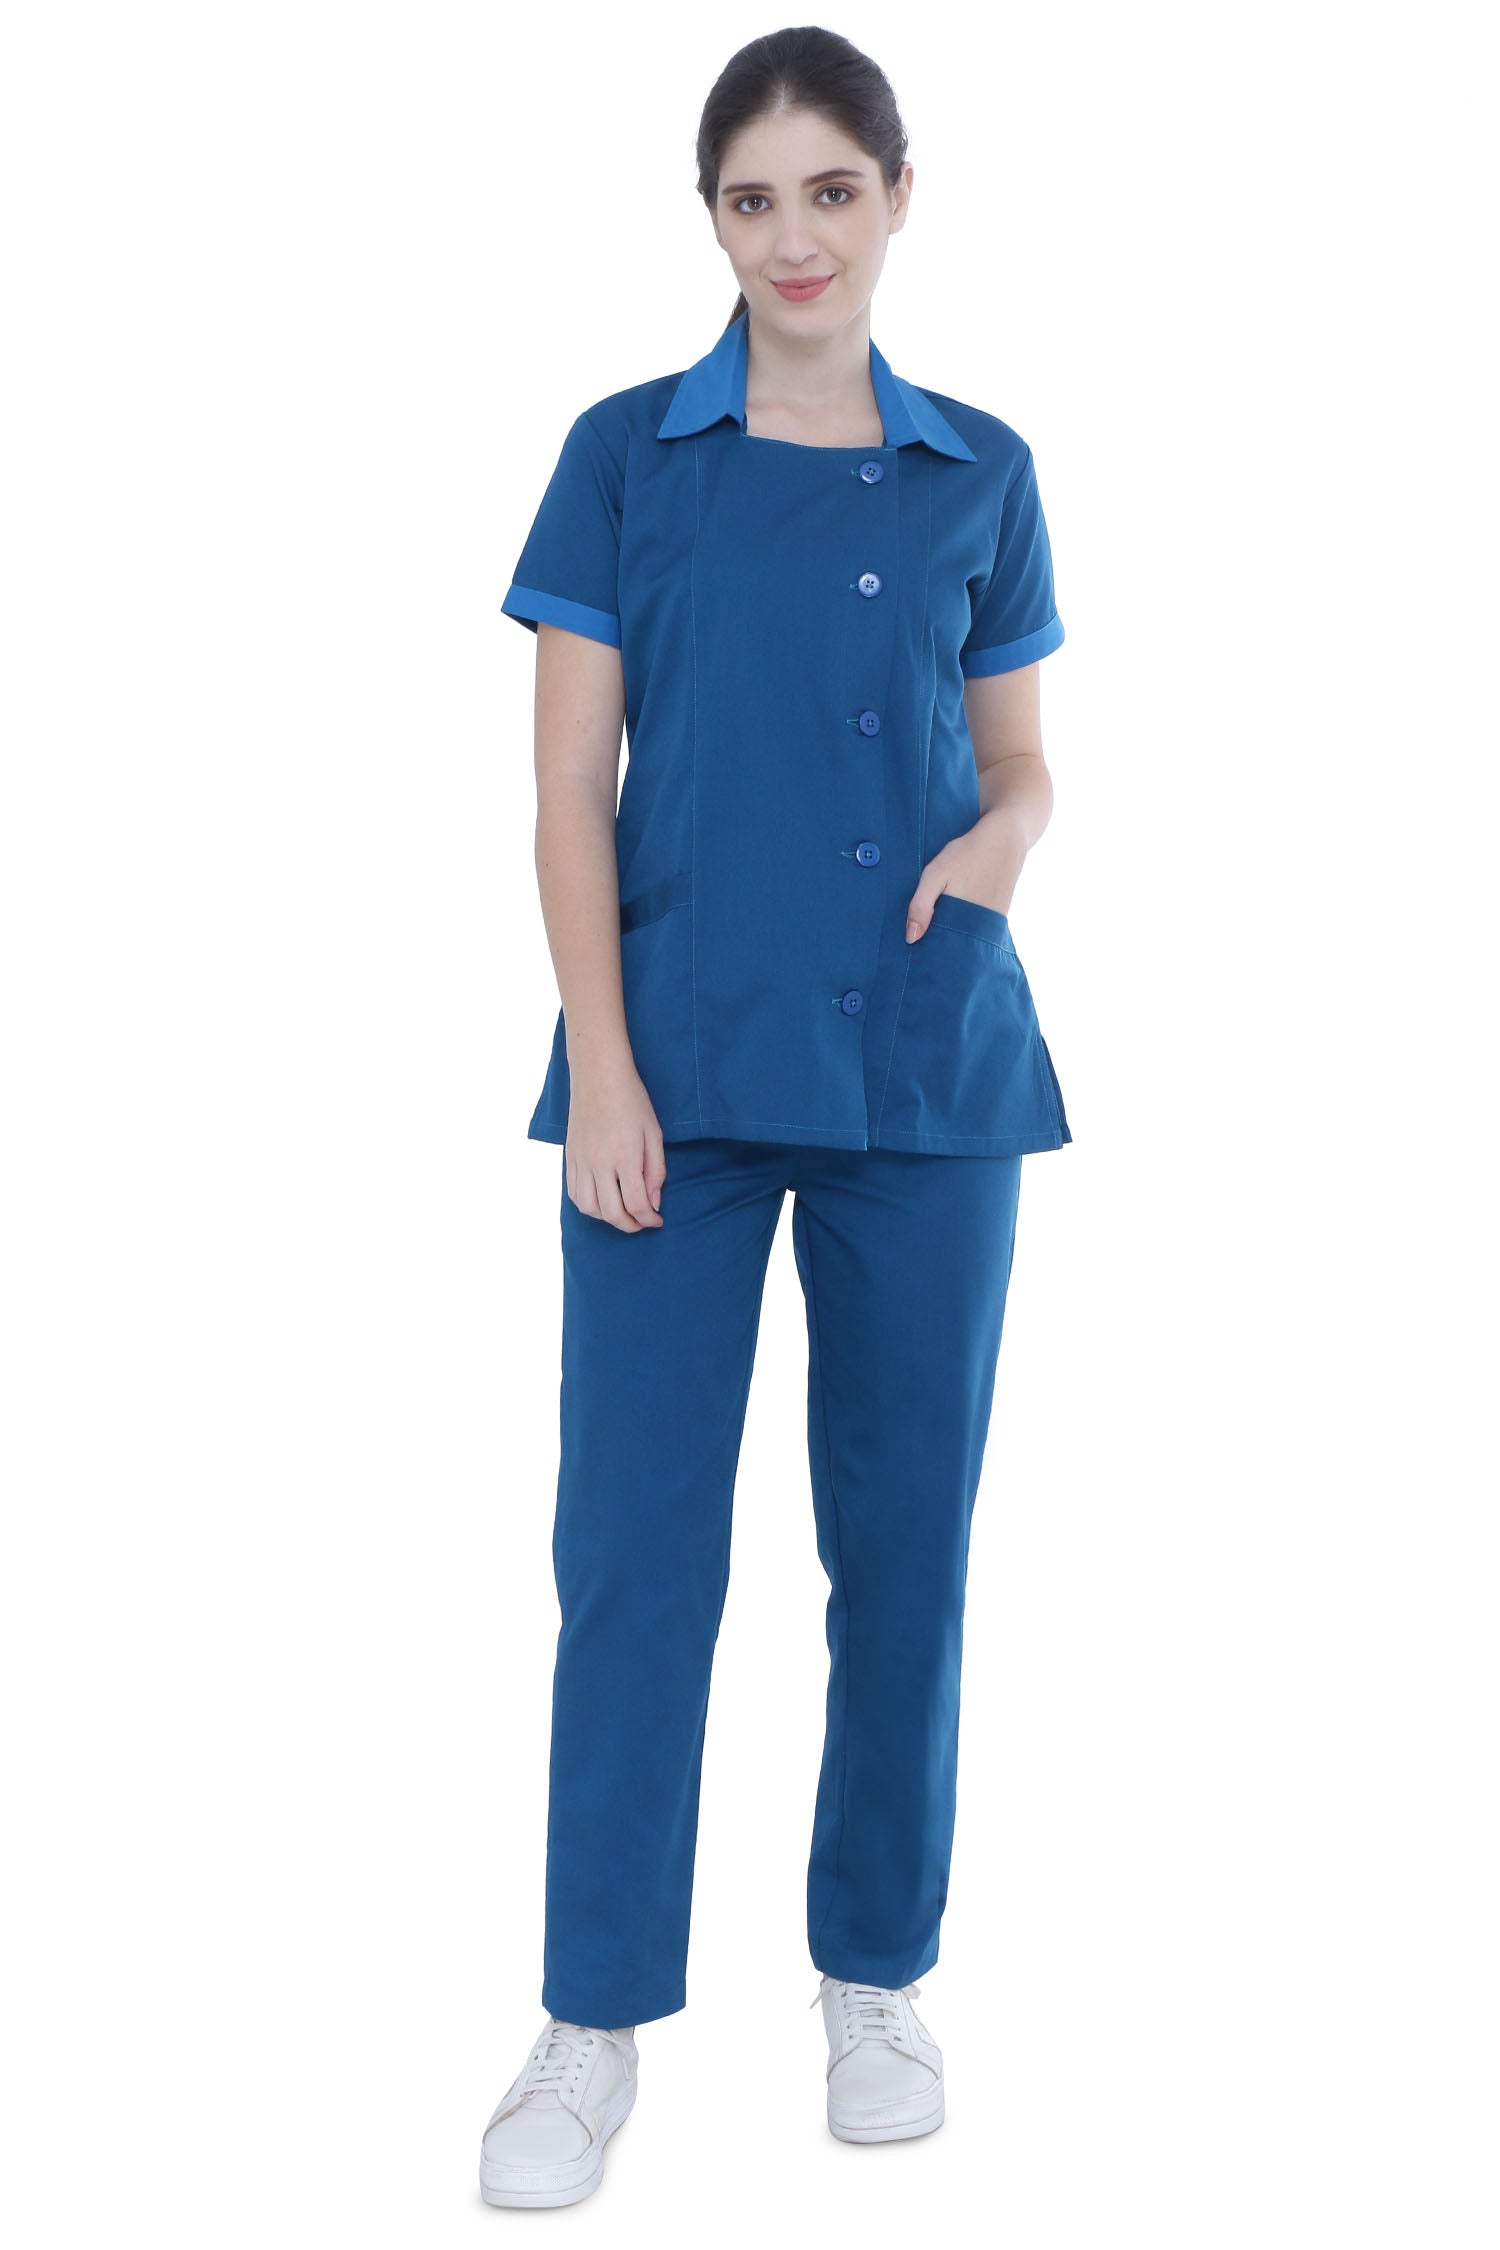 Medical Dresses | Healthcare Dresses | Workwear Dresses |  Uniforms4Healthcare